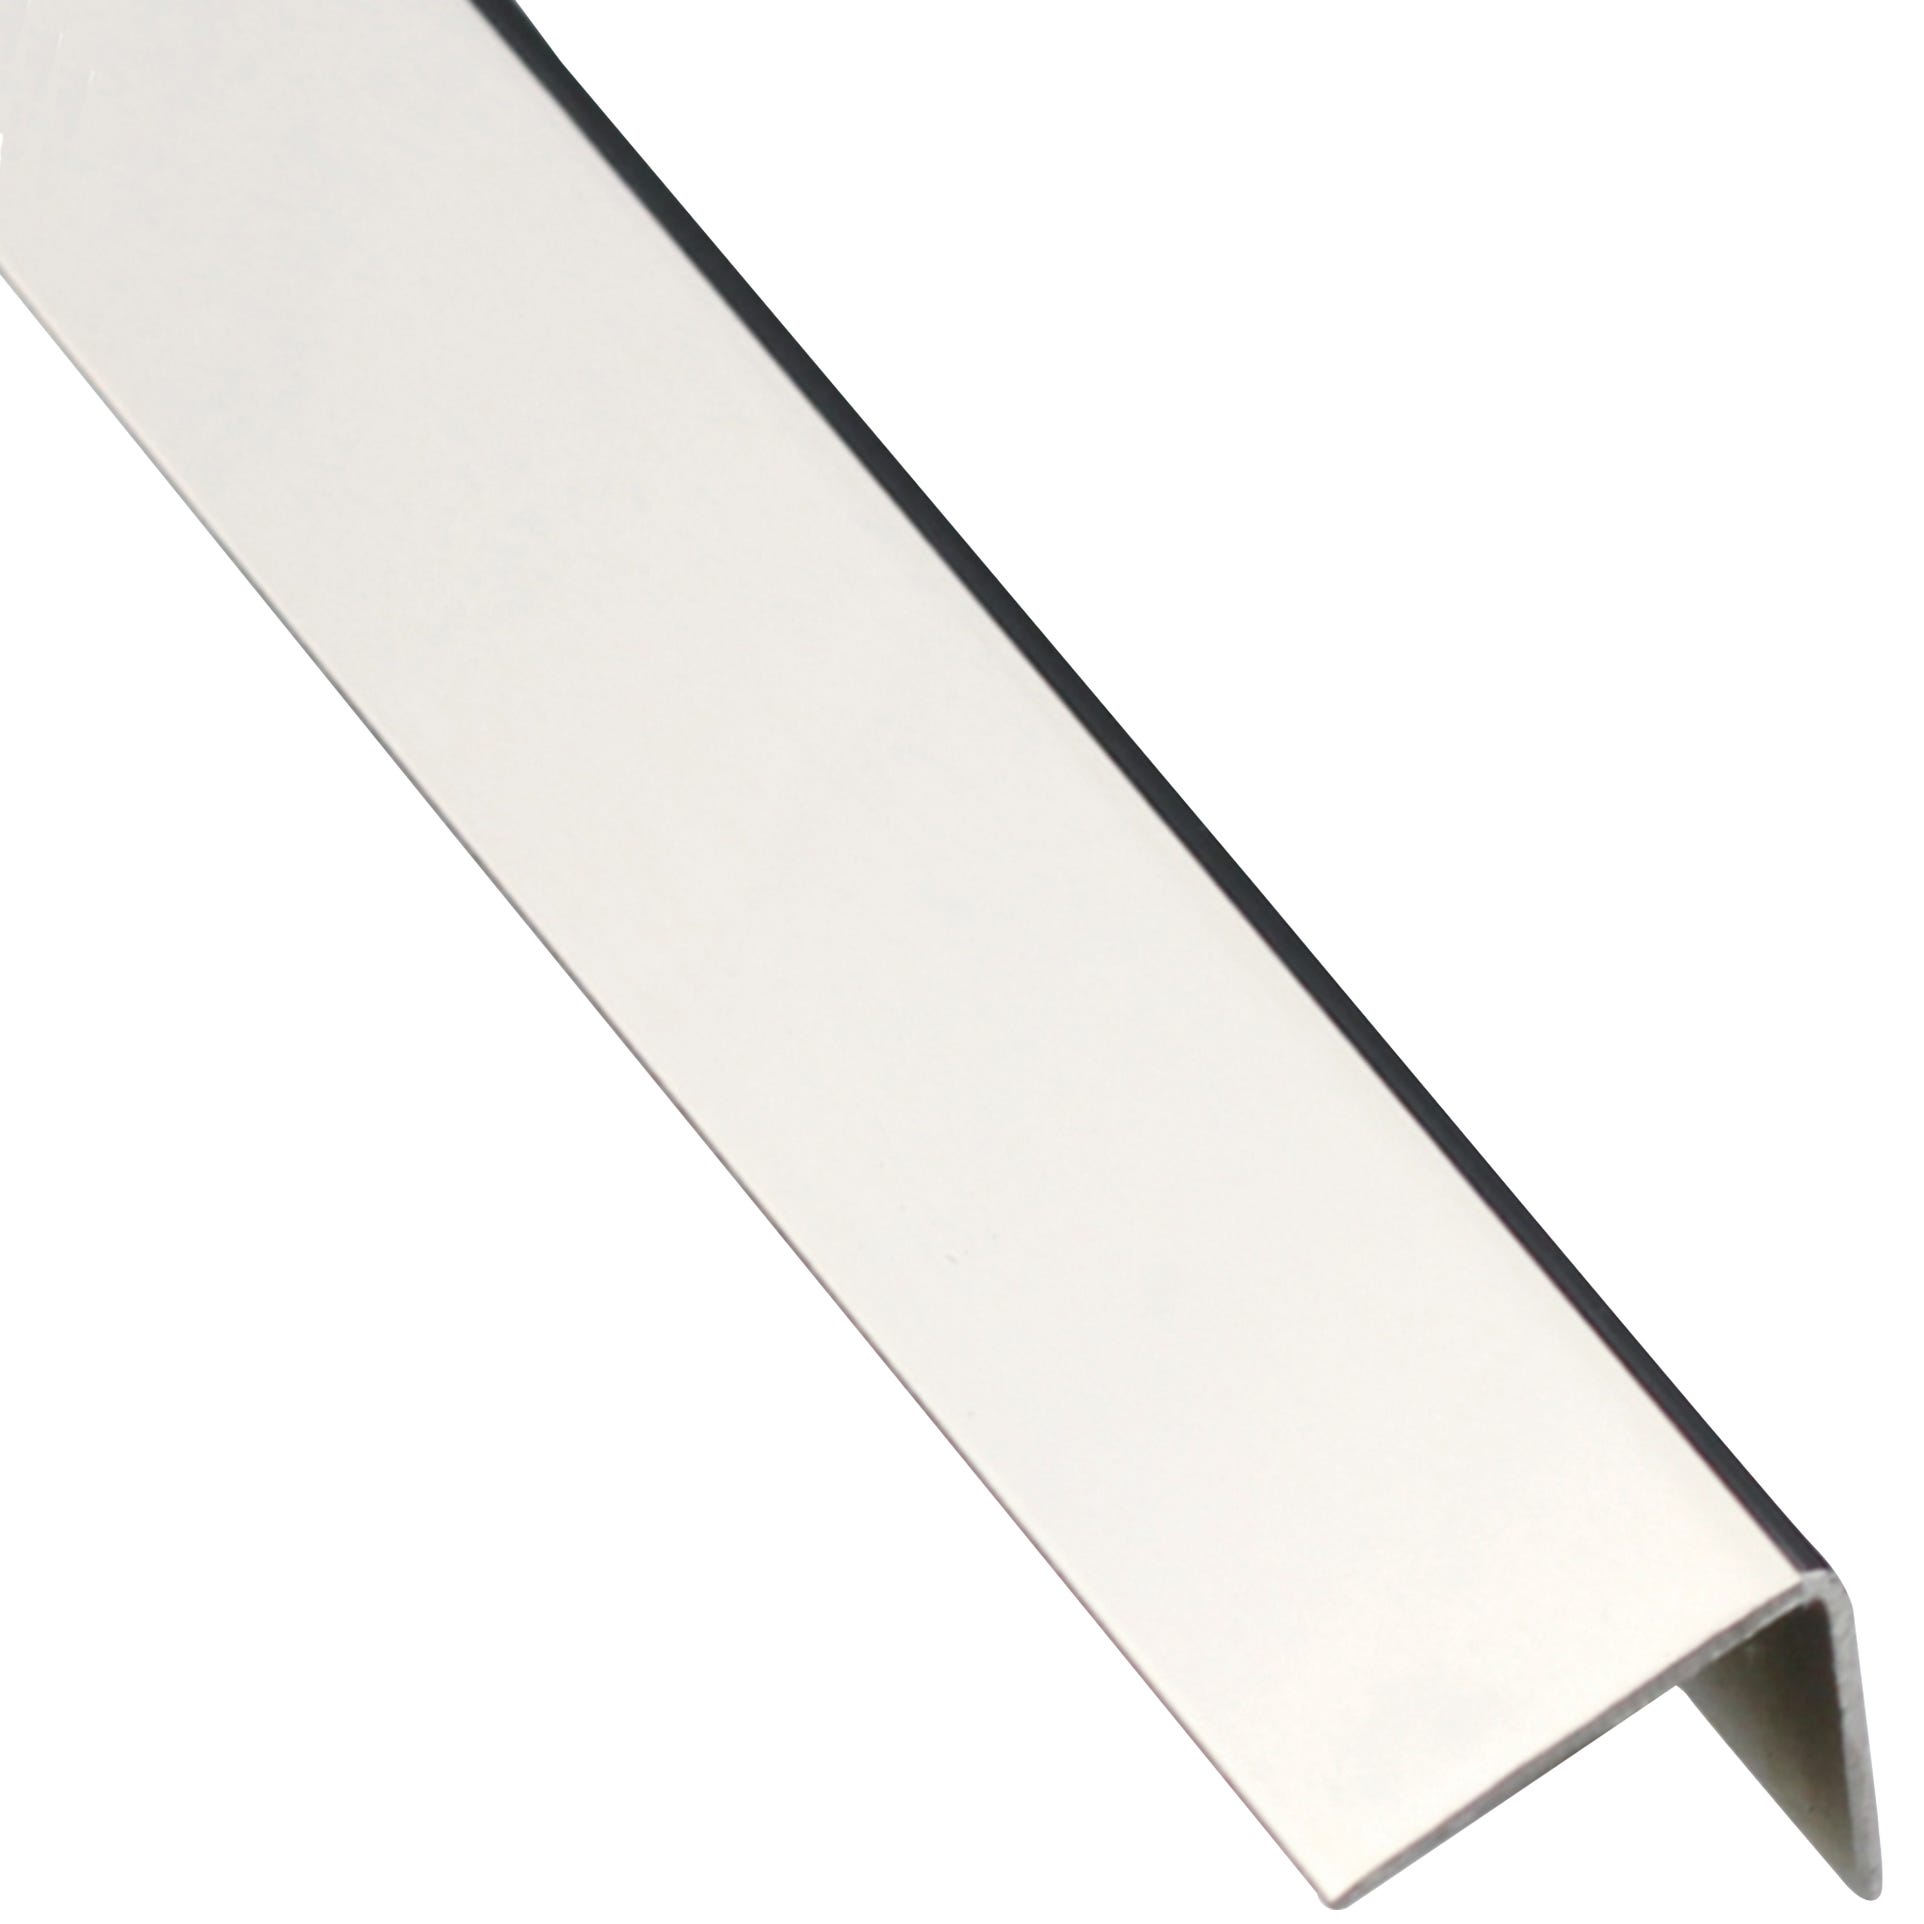 Perfil forma ángulo de aluminio blanco, Alt.2 x An.2 x L.200 cm